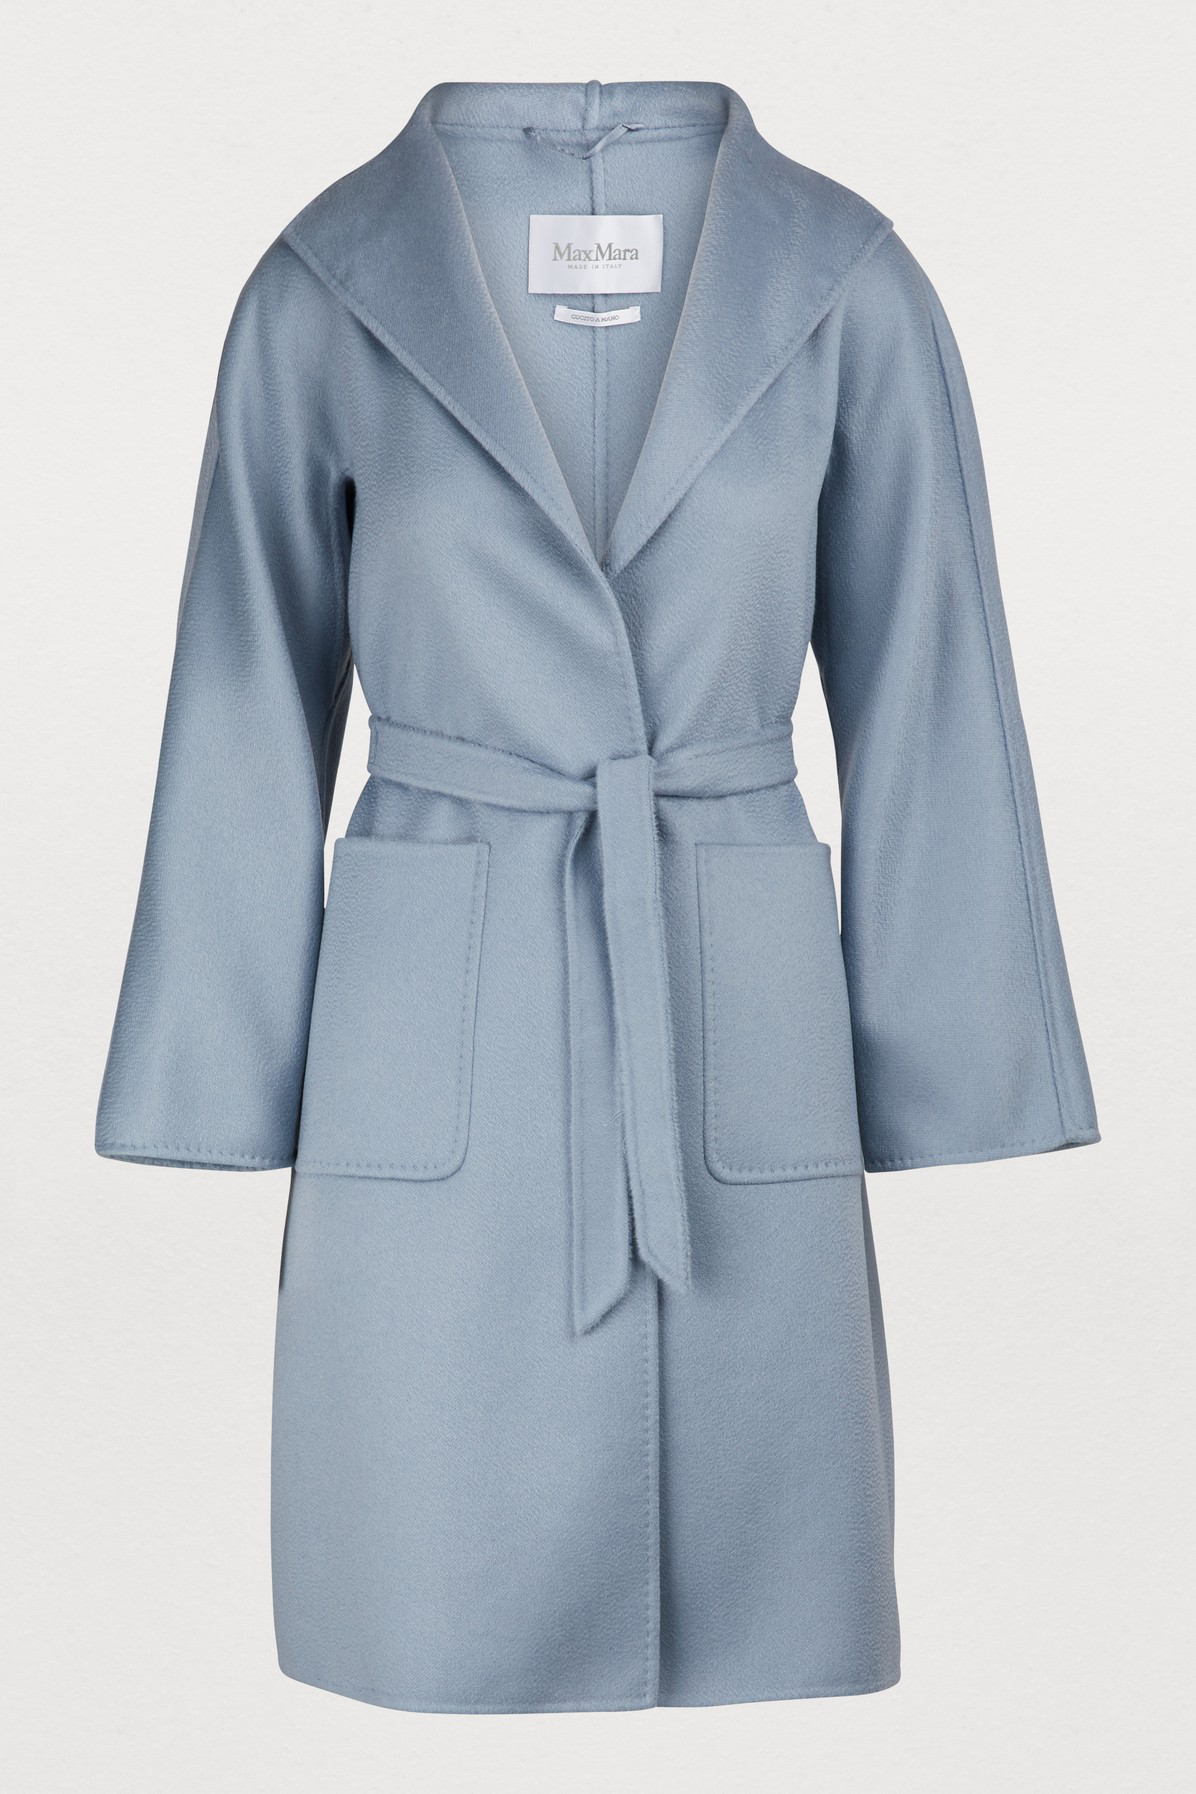 Max Mara Lillia Cashmere Coat In Blue | ModeSens